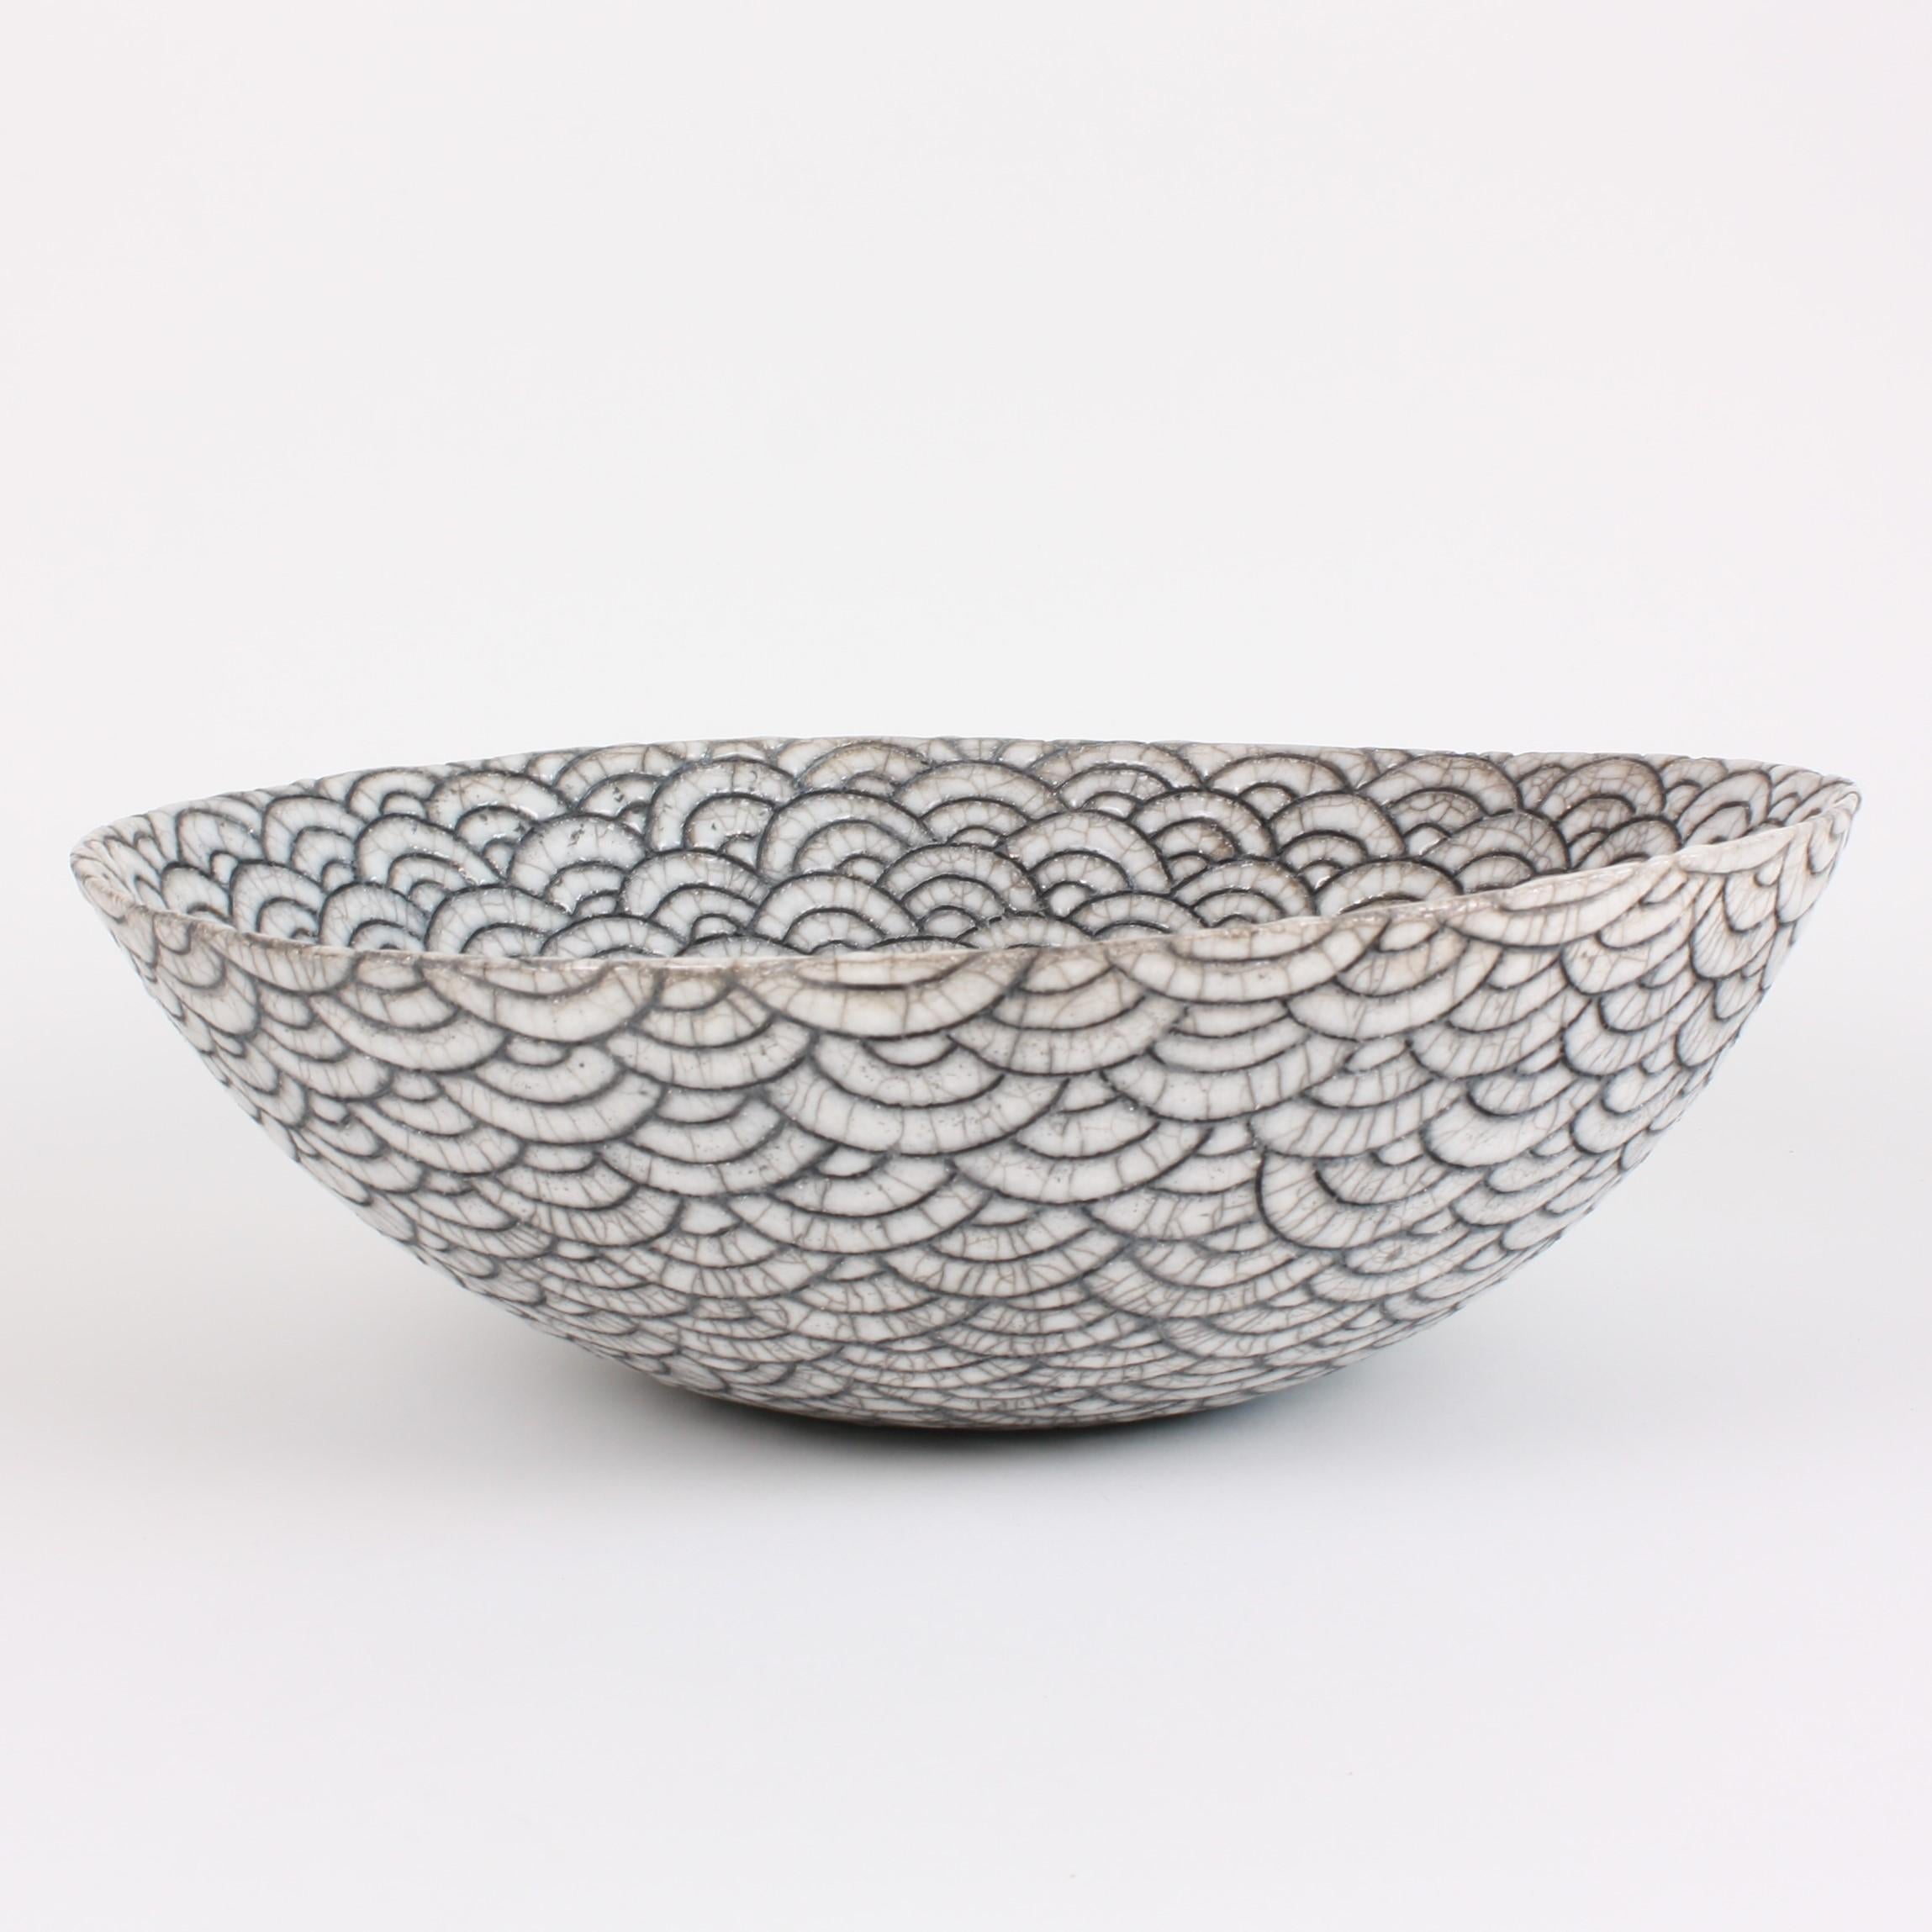 Minimalist Contemporary Black and White Ceramic Bowl, Coupe Japonaise III